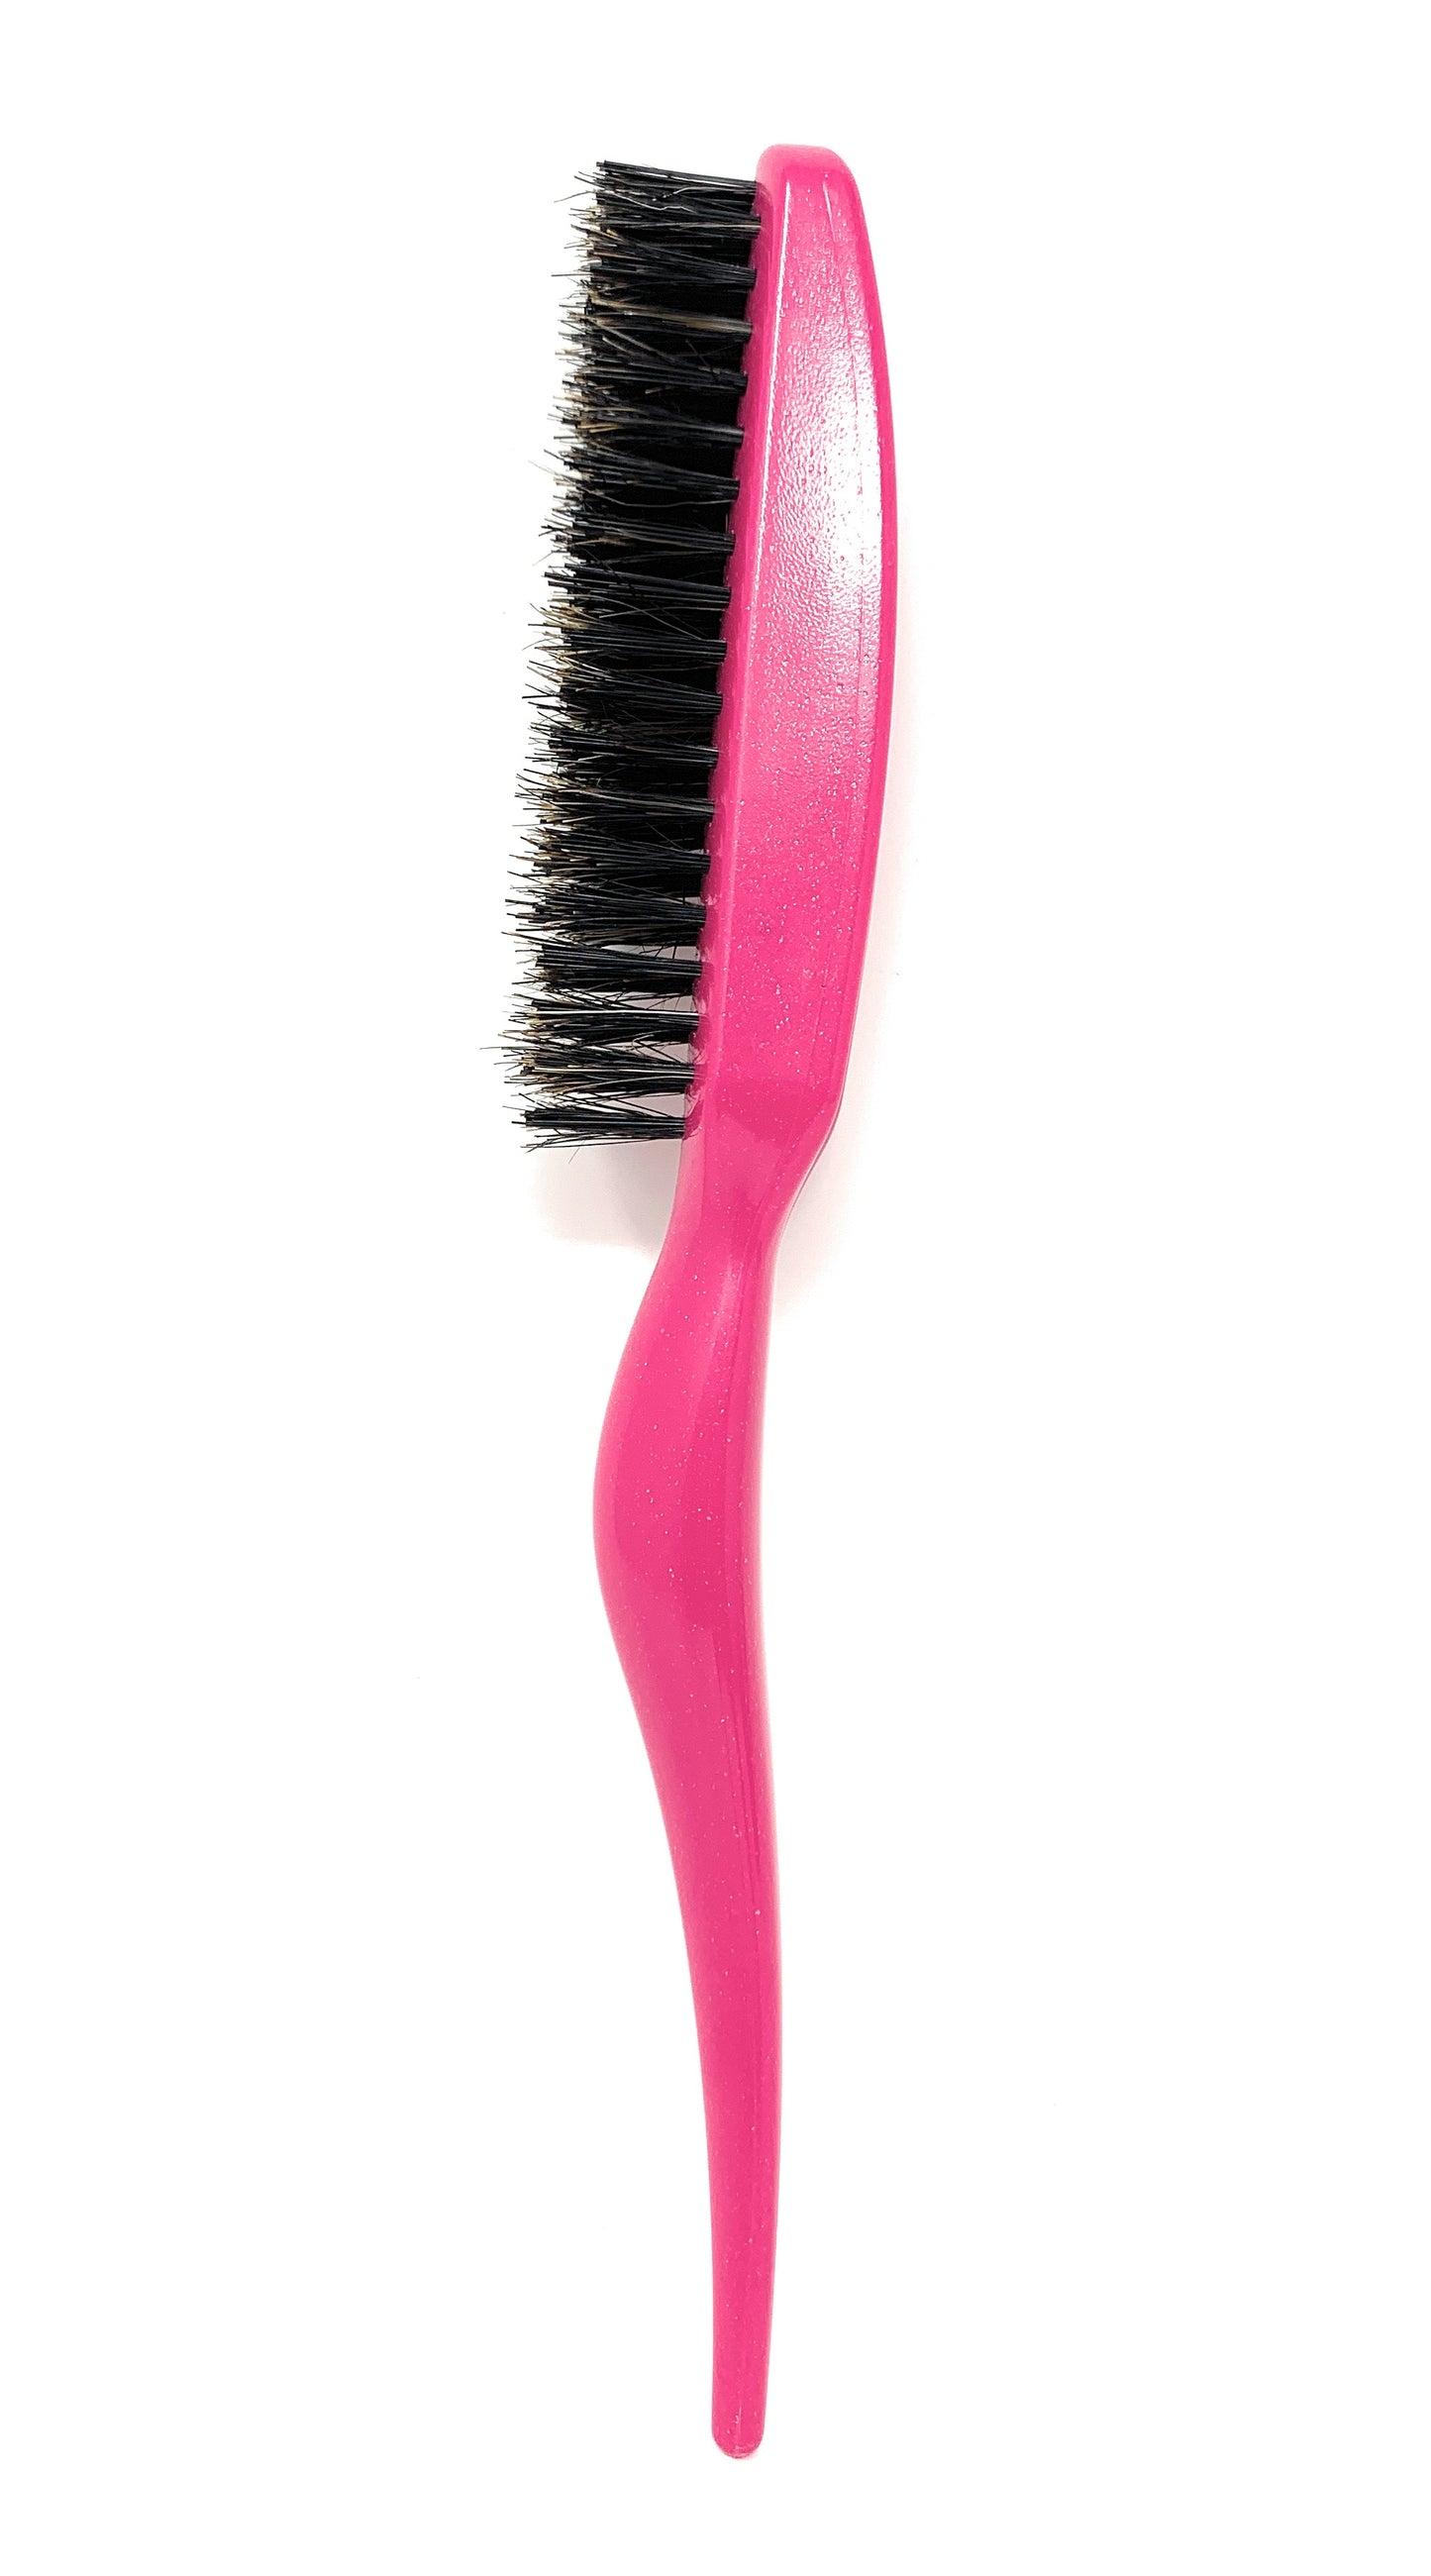 Cricket Amped Up Styler, Teasing Boar and Nylon bristle Hair Brush RatTail Brush Pink, Black 1 pc.